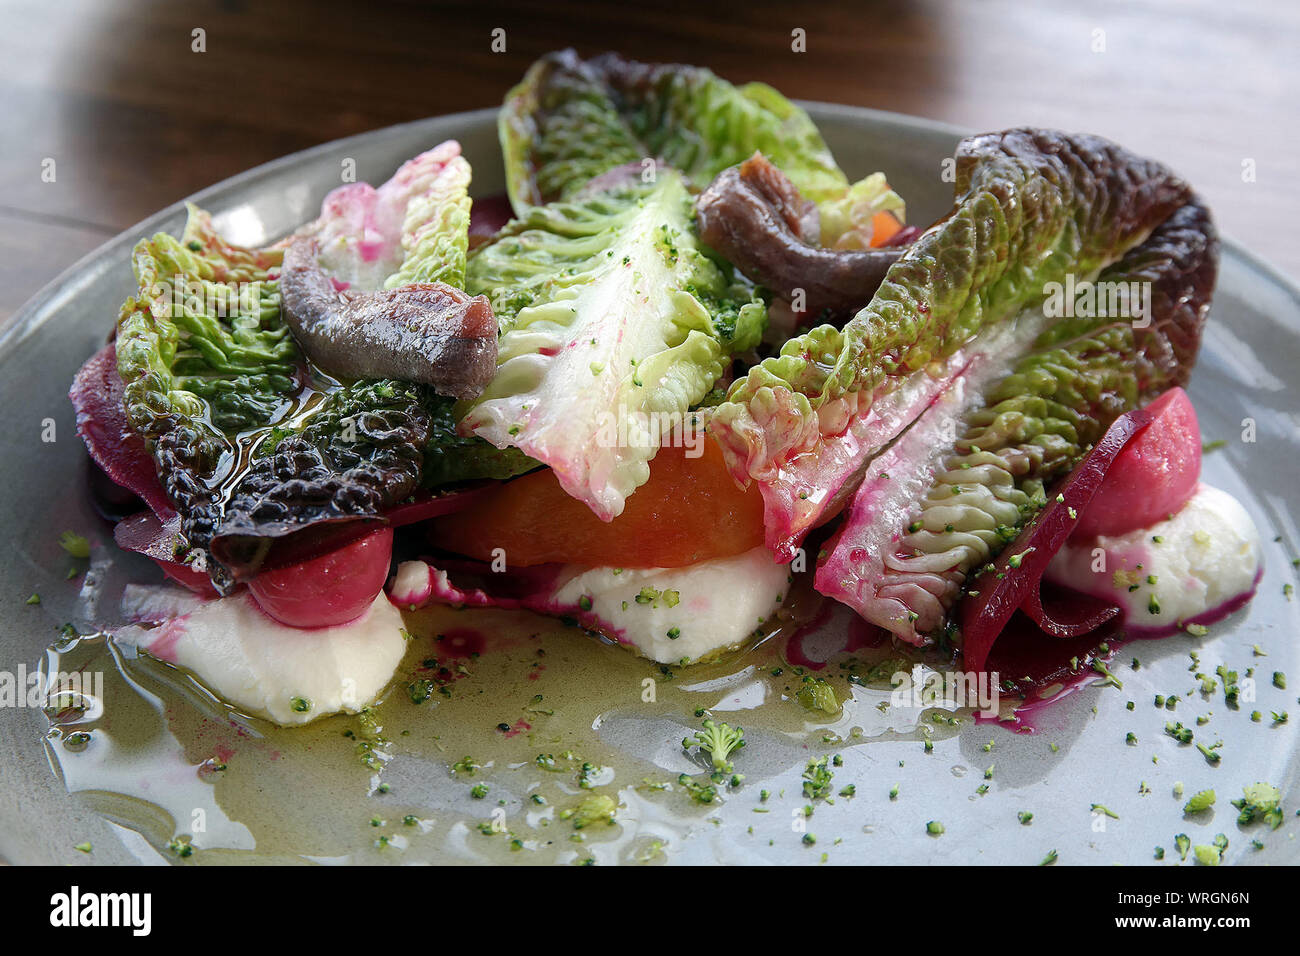 Food Garnish With Lettuce Stock Photo